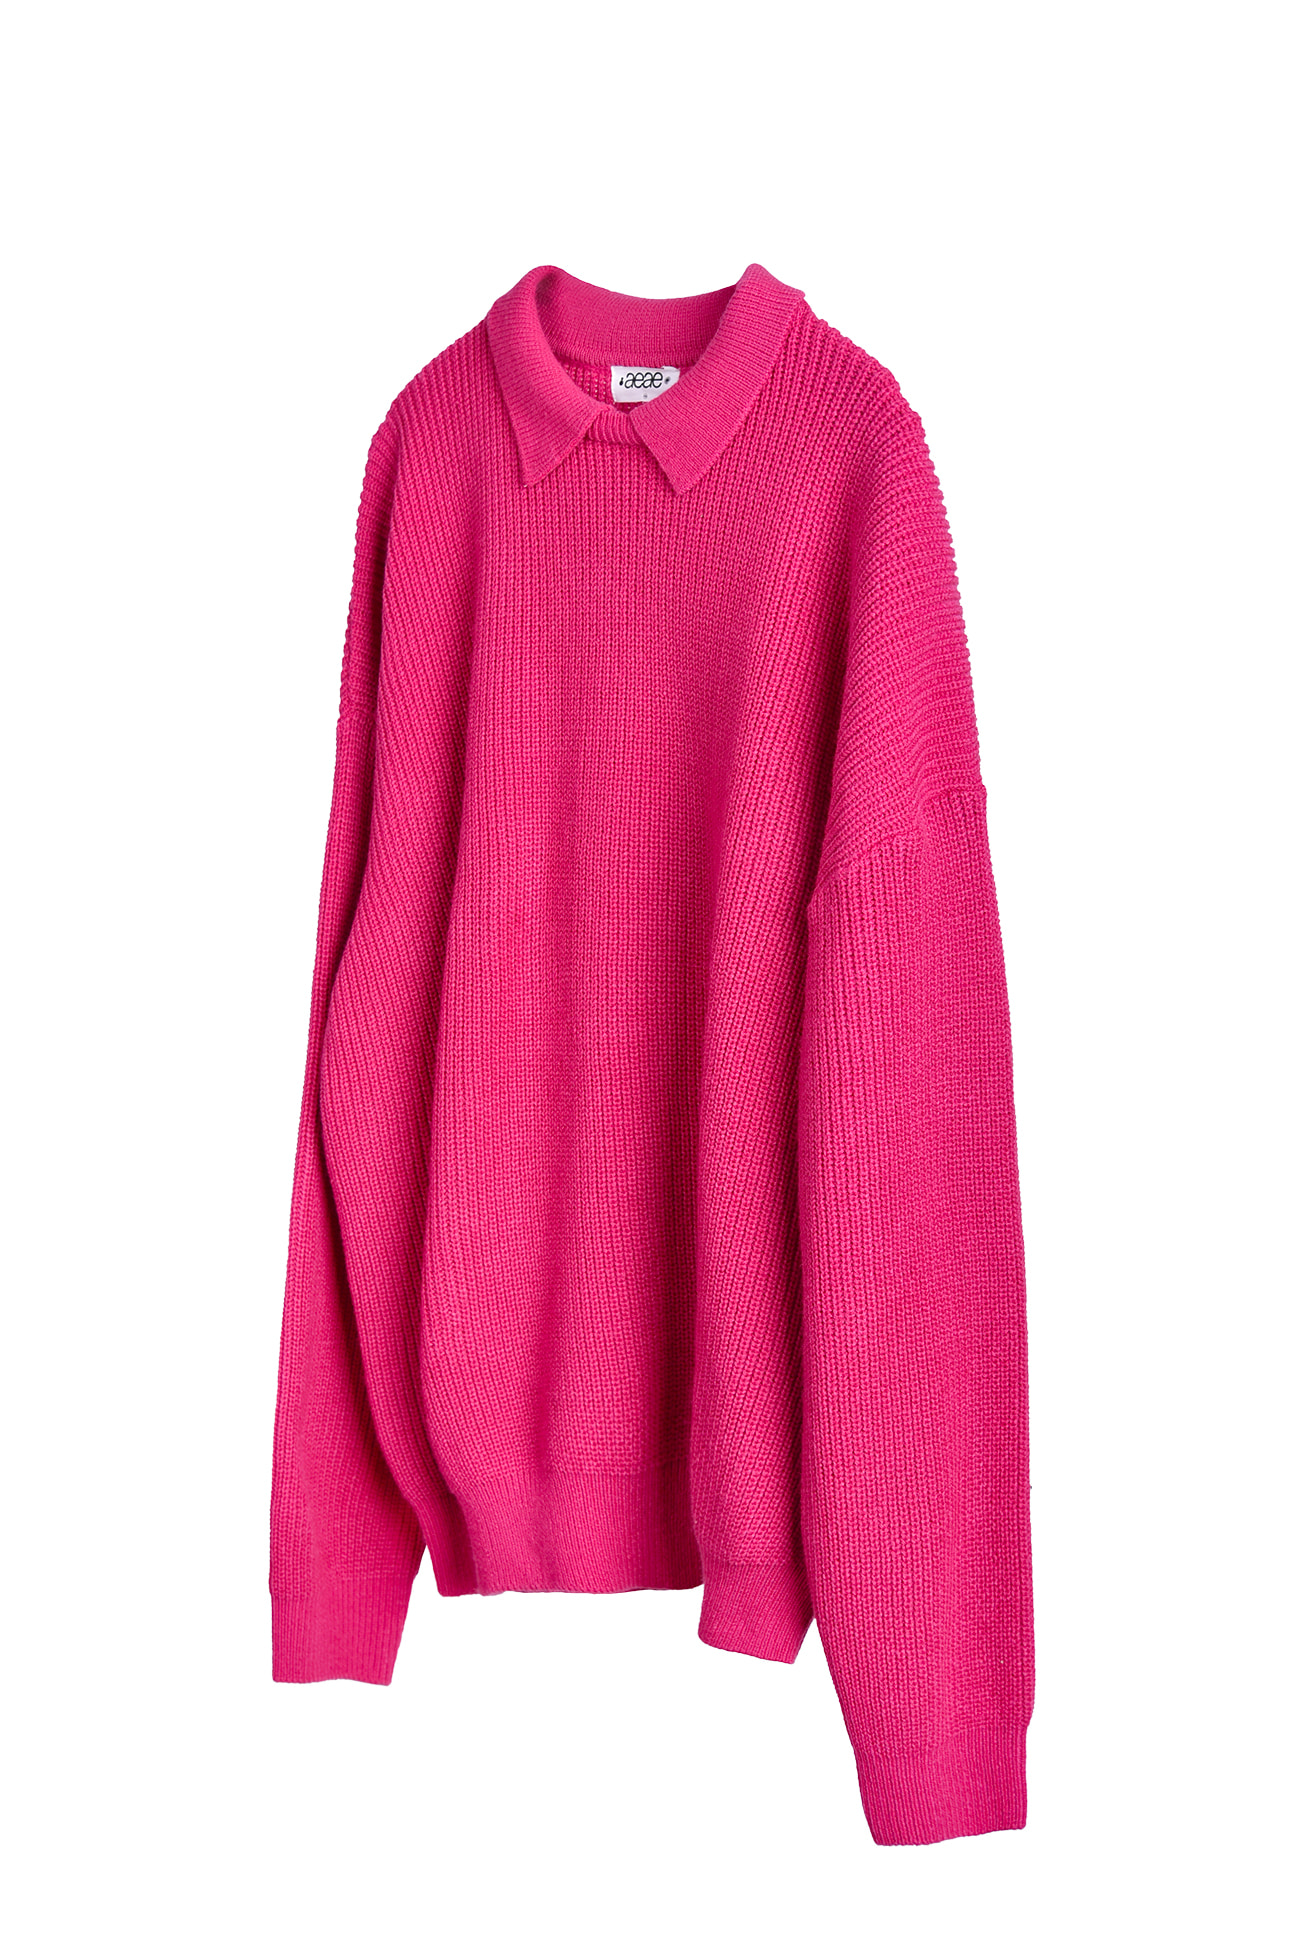 Collar Knit Sweatrer [Pink]